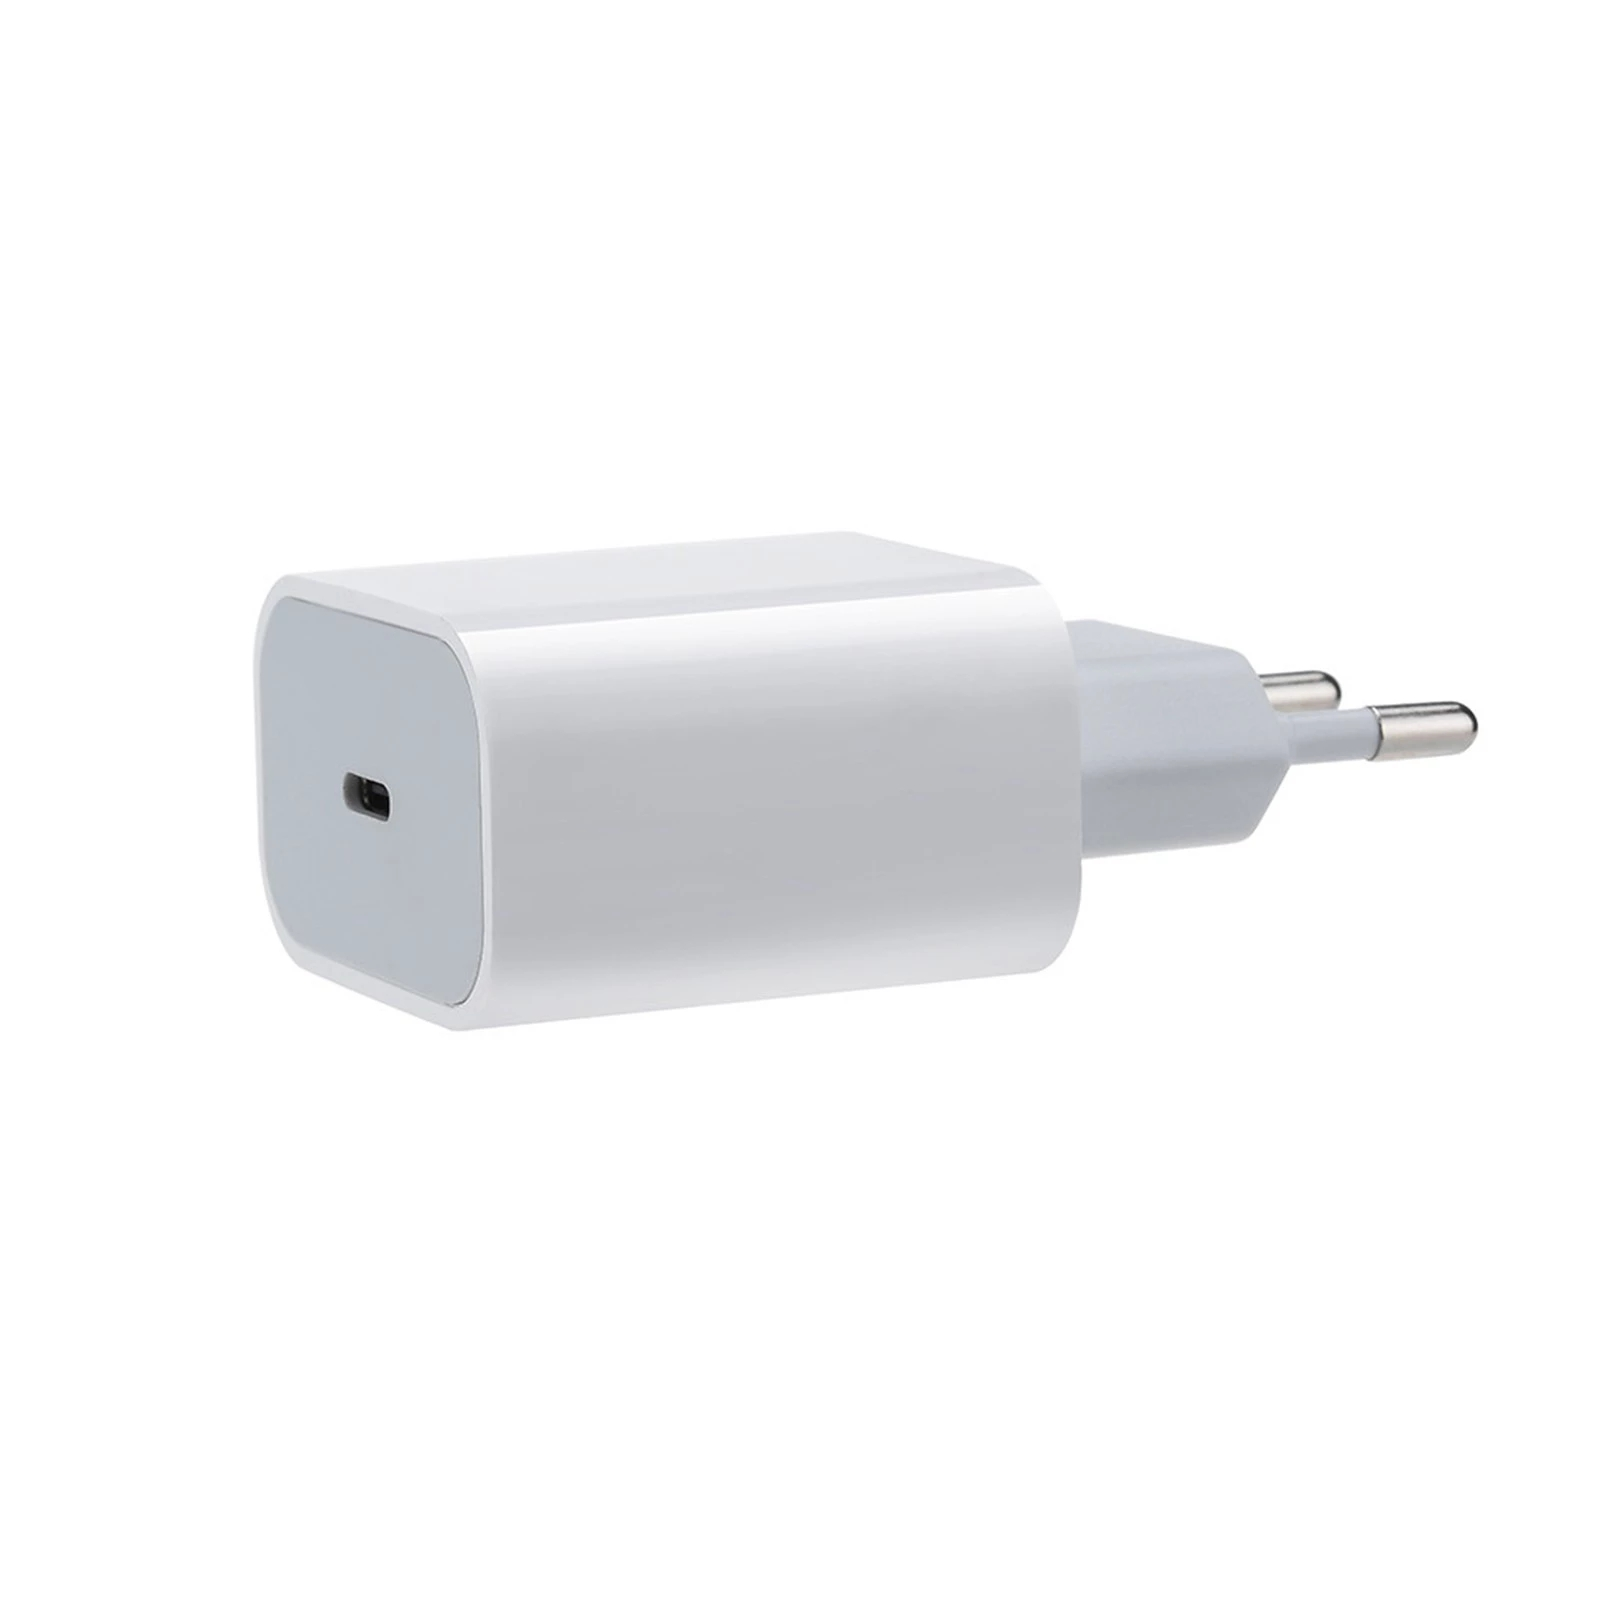 15 Pro Weiß USB 20W Plus Apple 15 15 Ladegerät Ladekabel 15 iPhone / Ladegerät Pro / VENTARENT für iPhone / Max C Netzteil Apple, iPad und